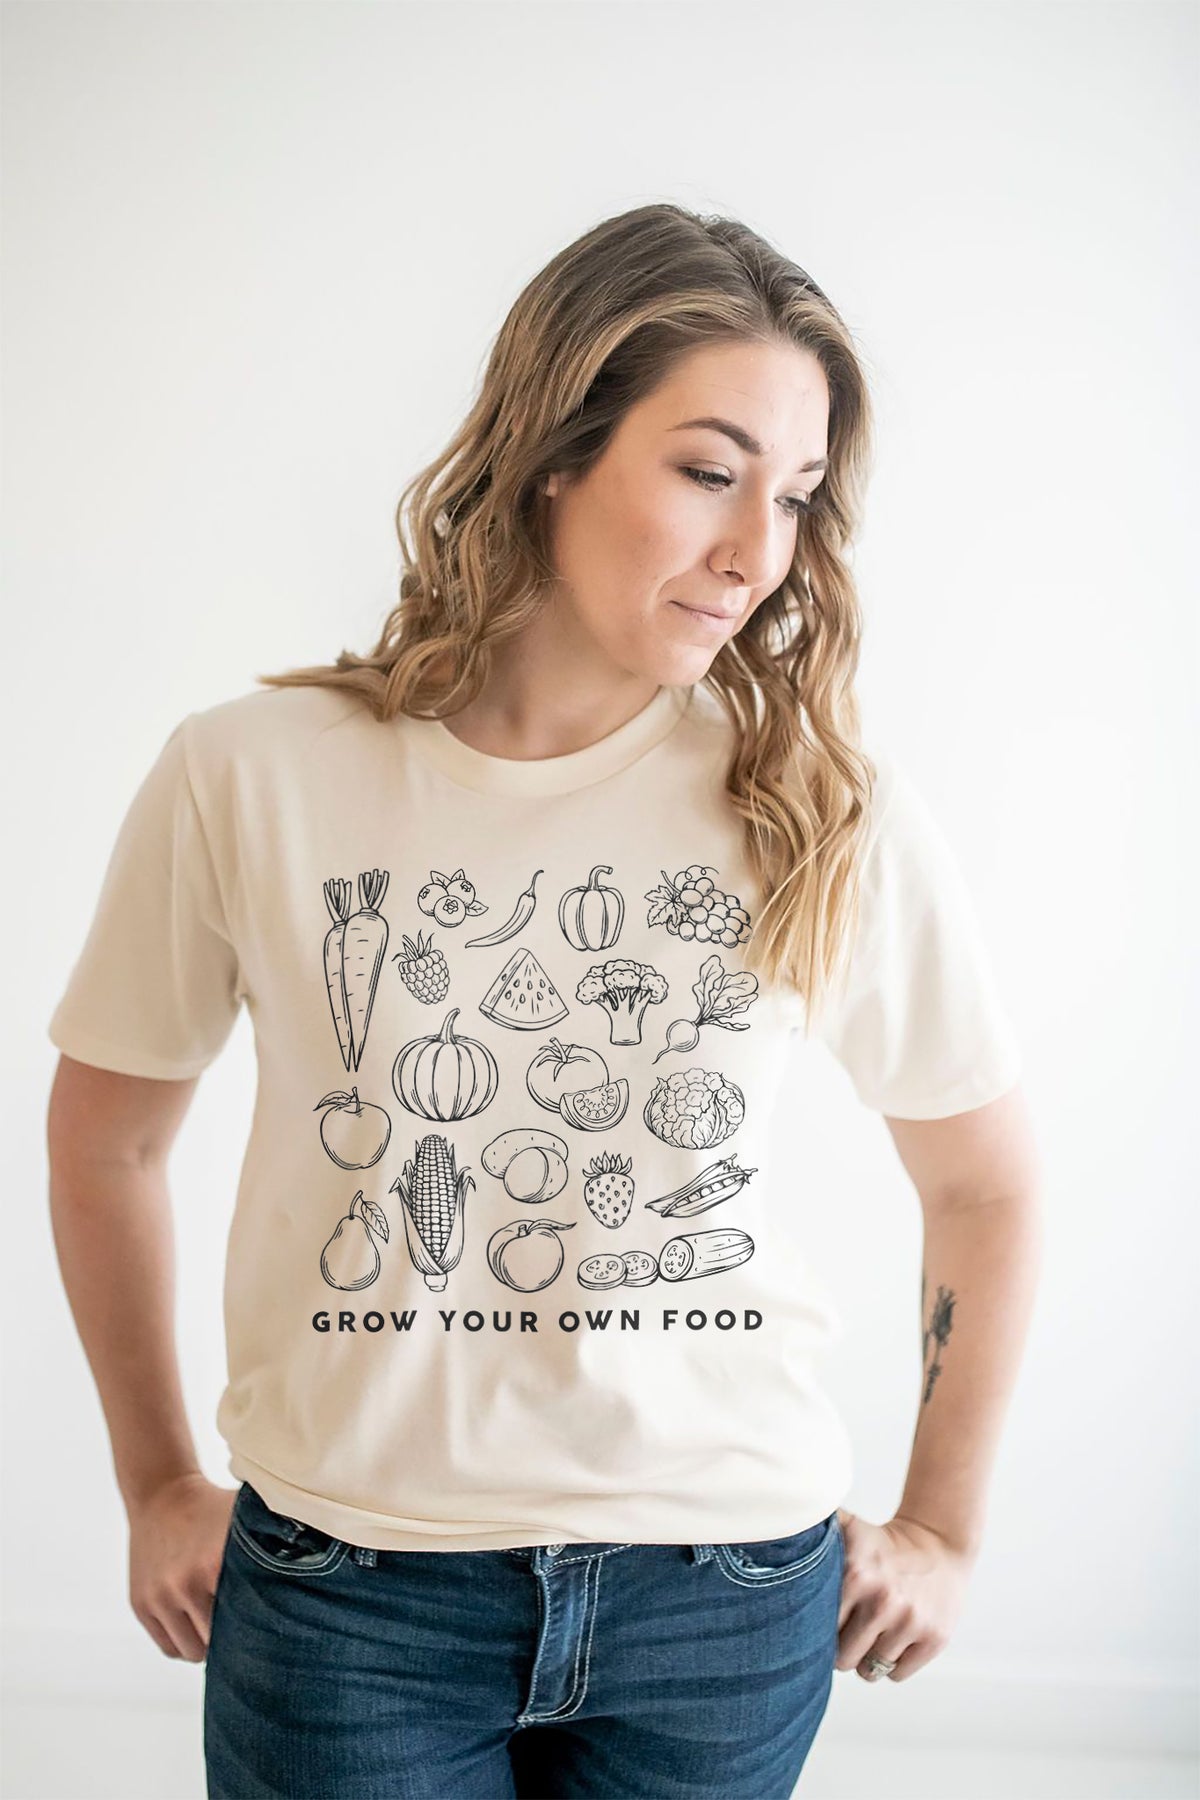 Grow Your Own Food Shirt